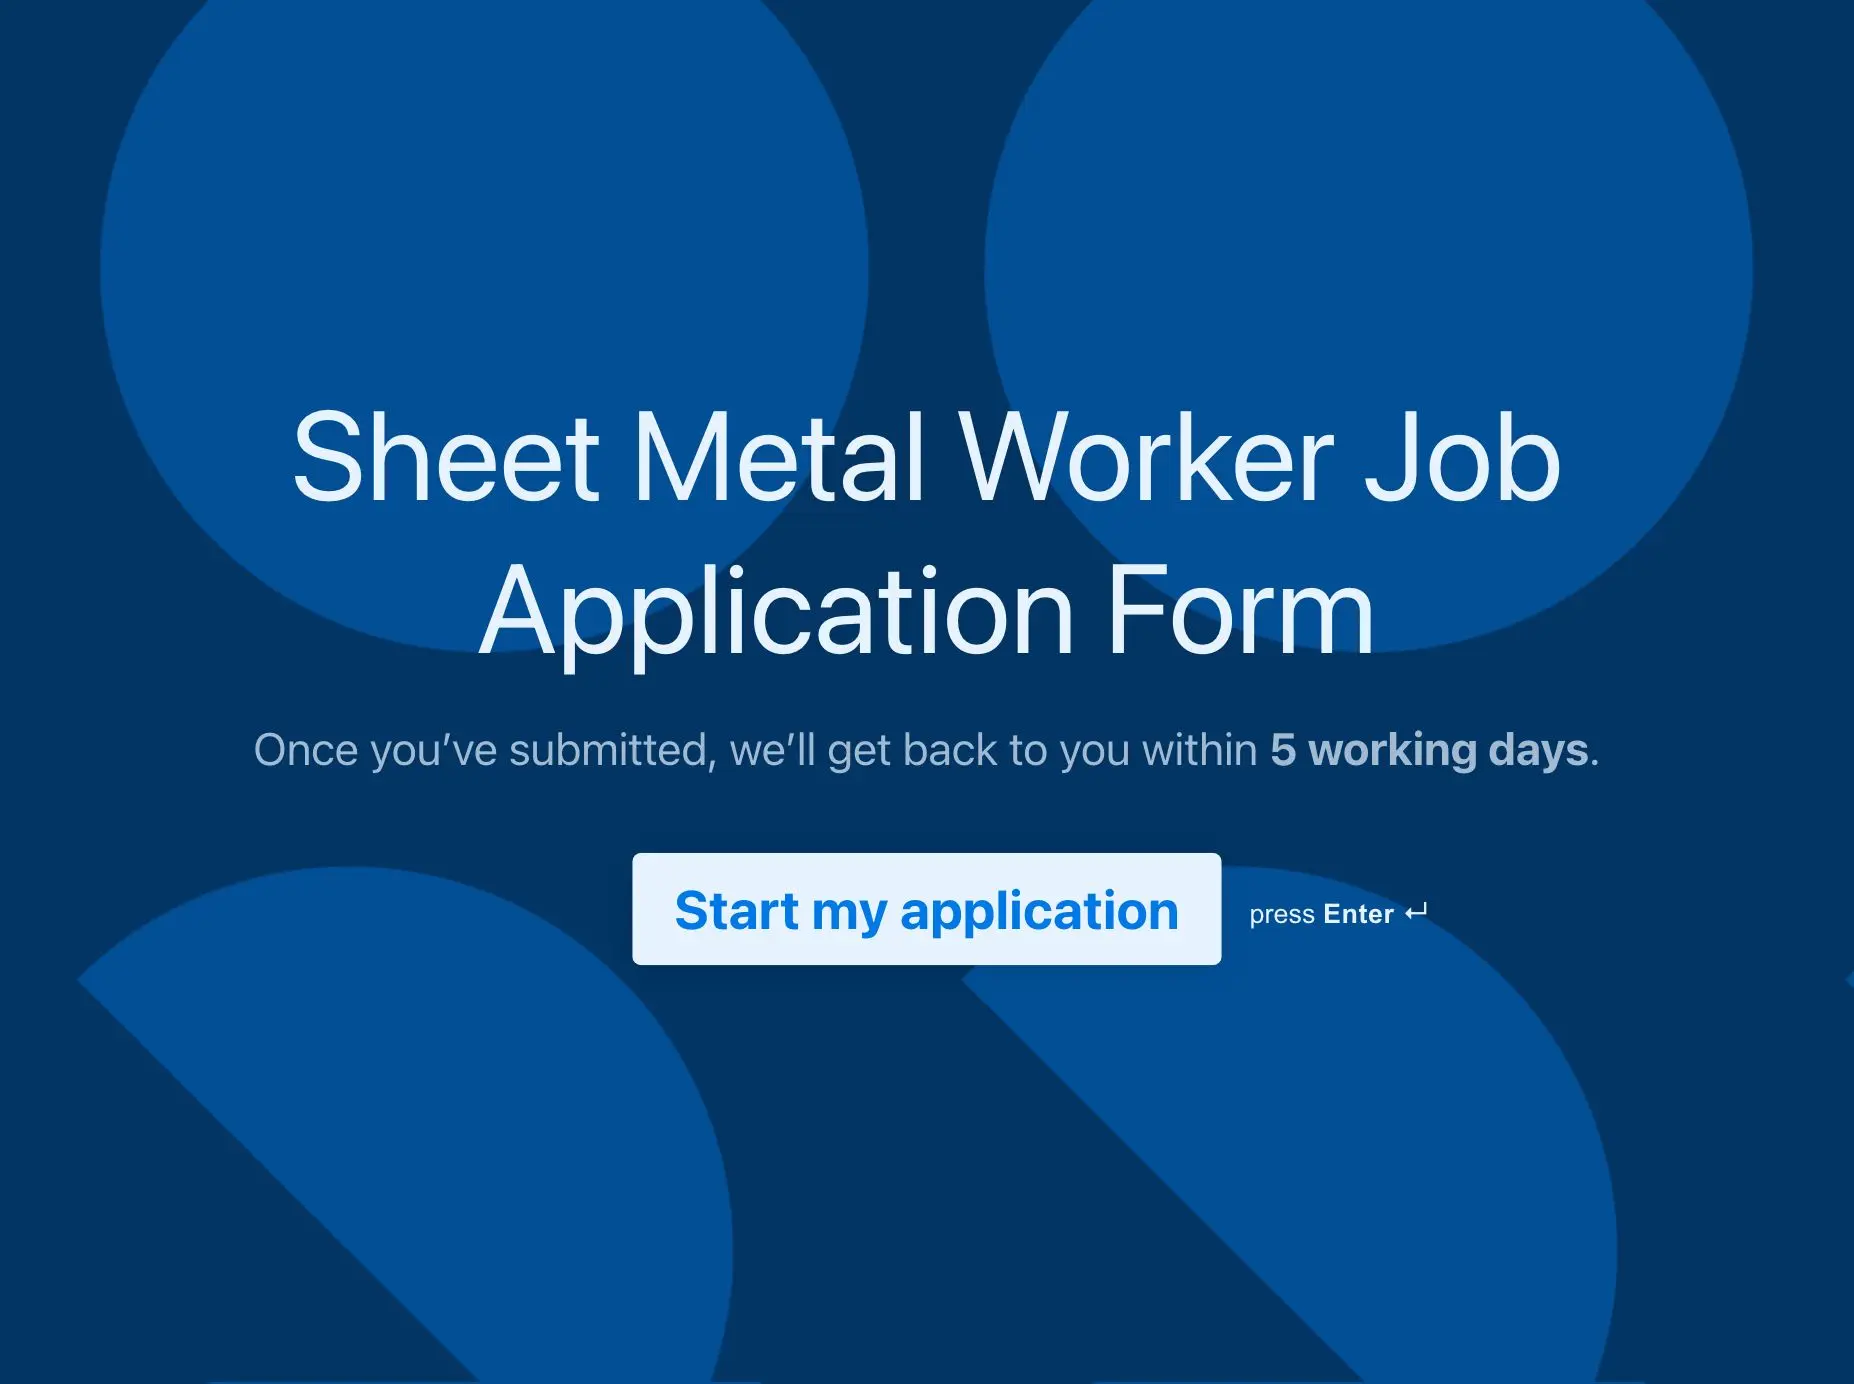 Sheet Metal Worker Job Application Form Template Hero